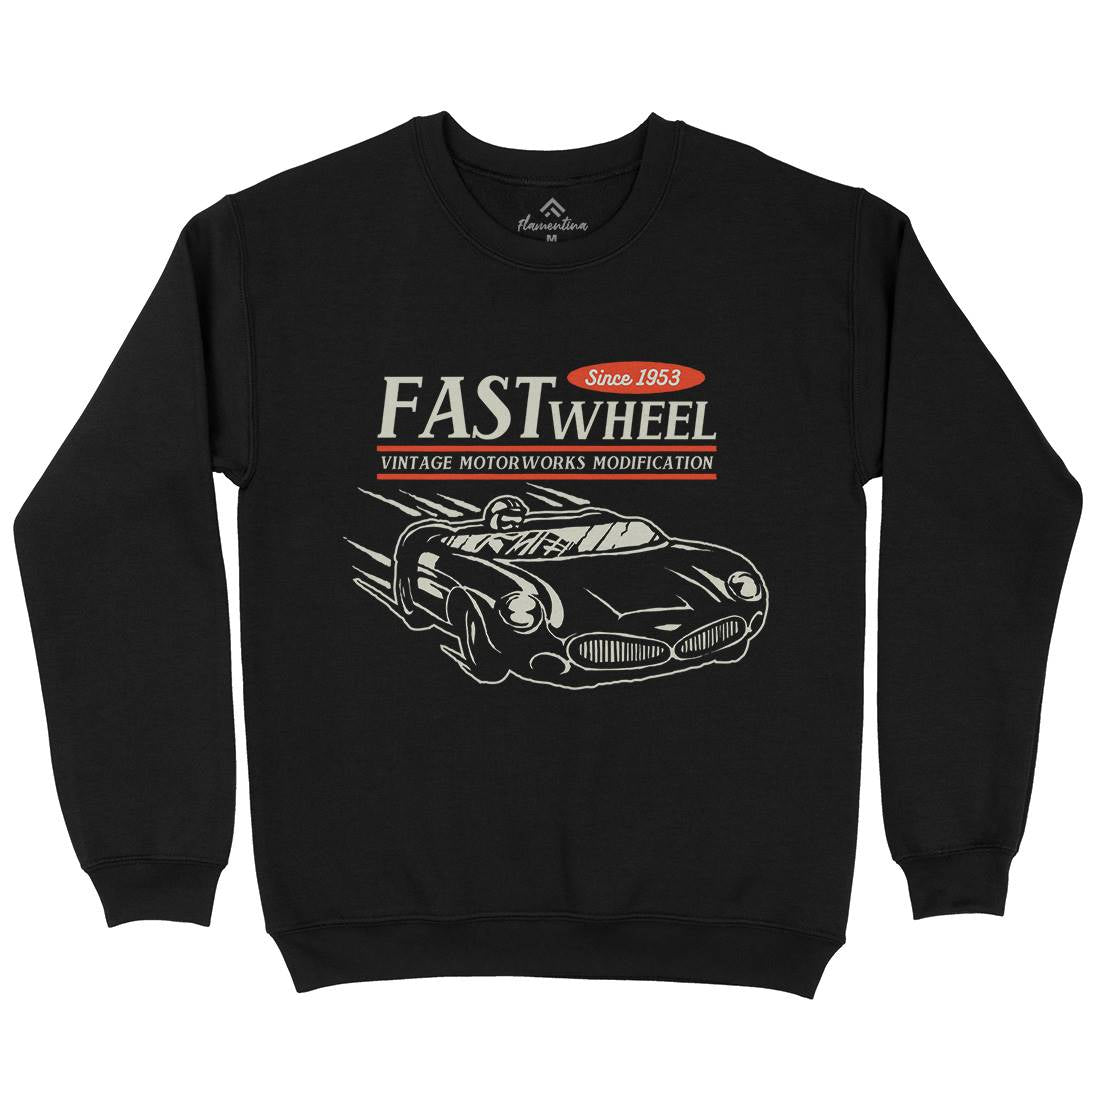 Vintage Racer Speed Kids Crew Neck Sweatshirt Cars A493